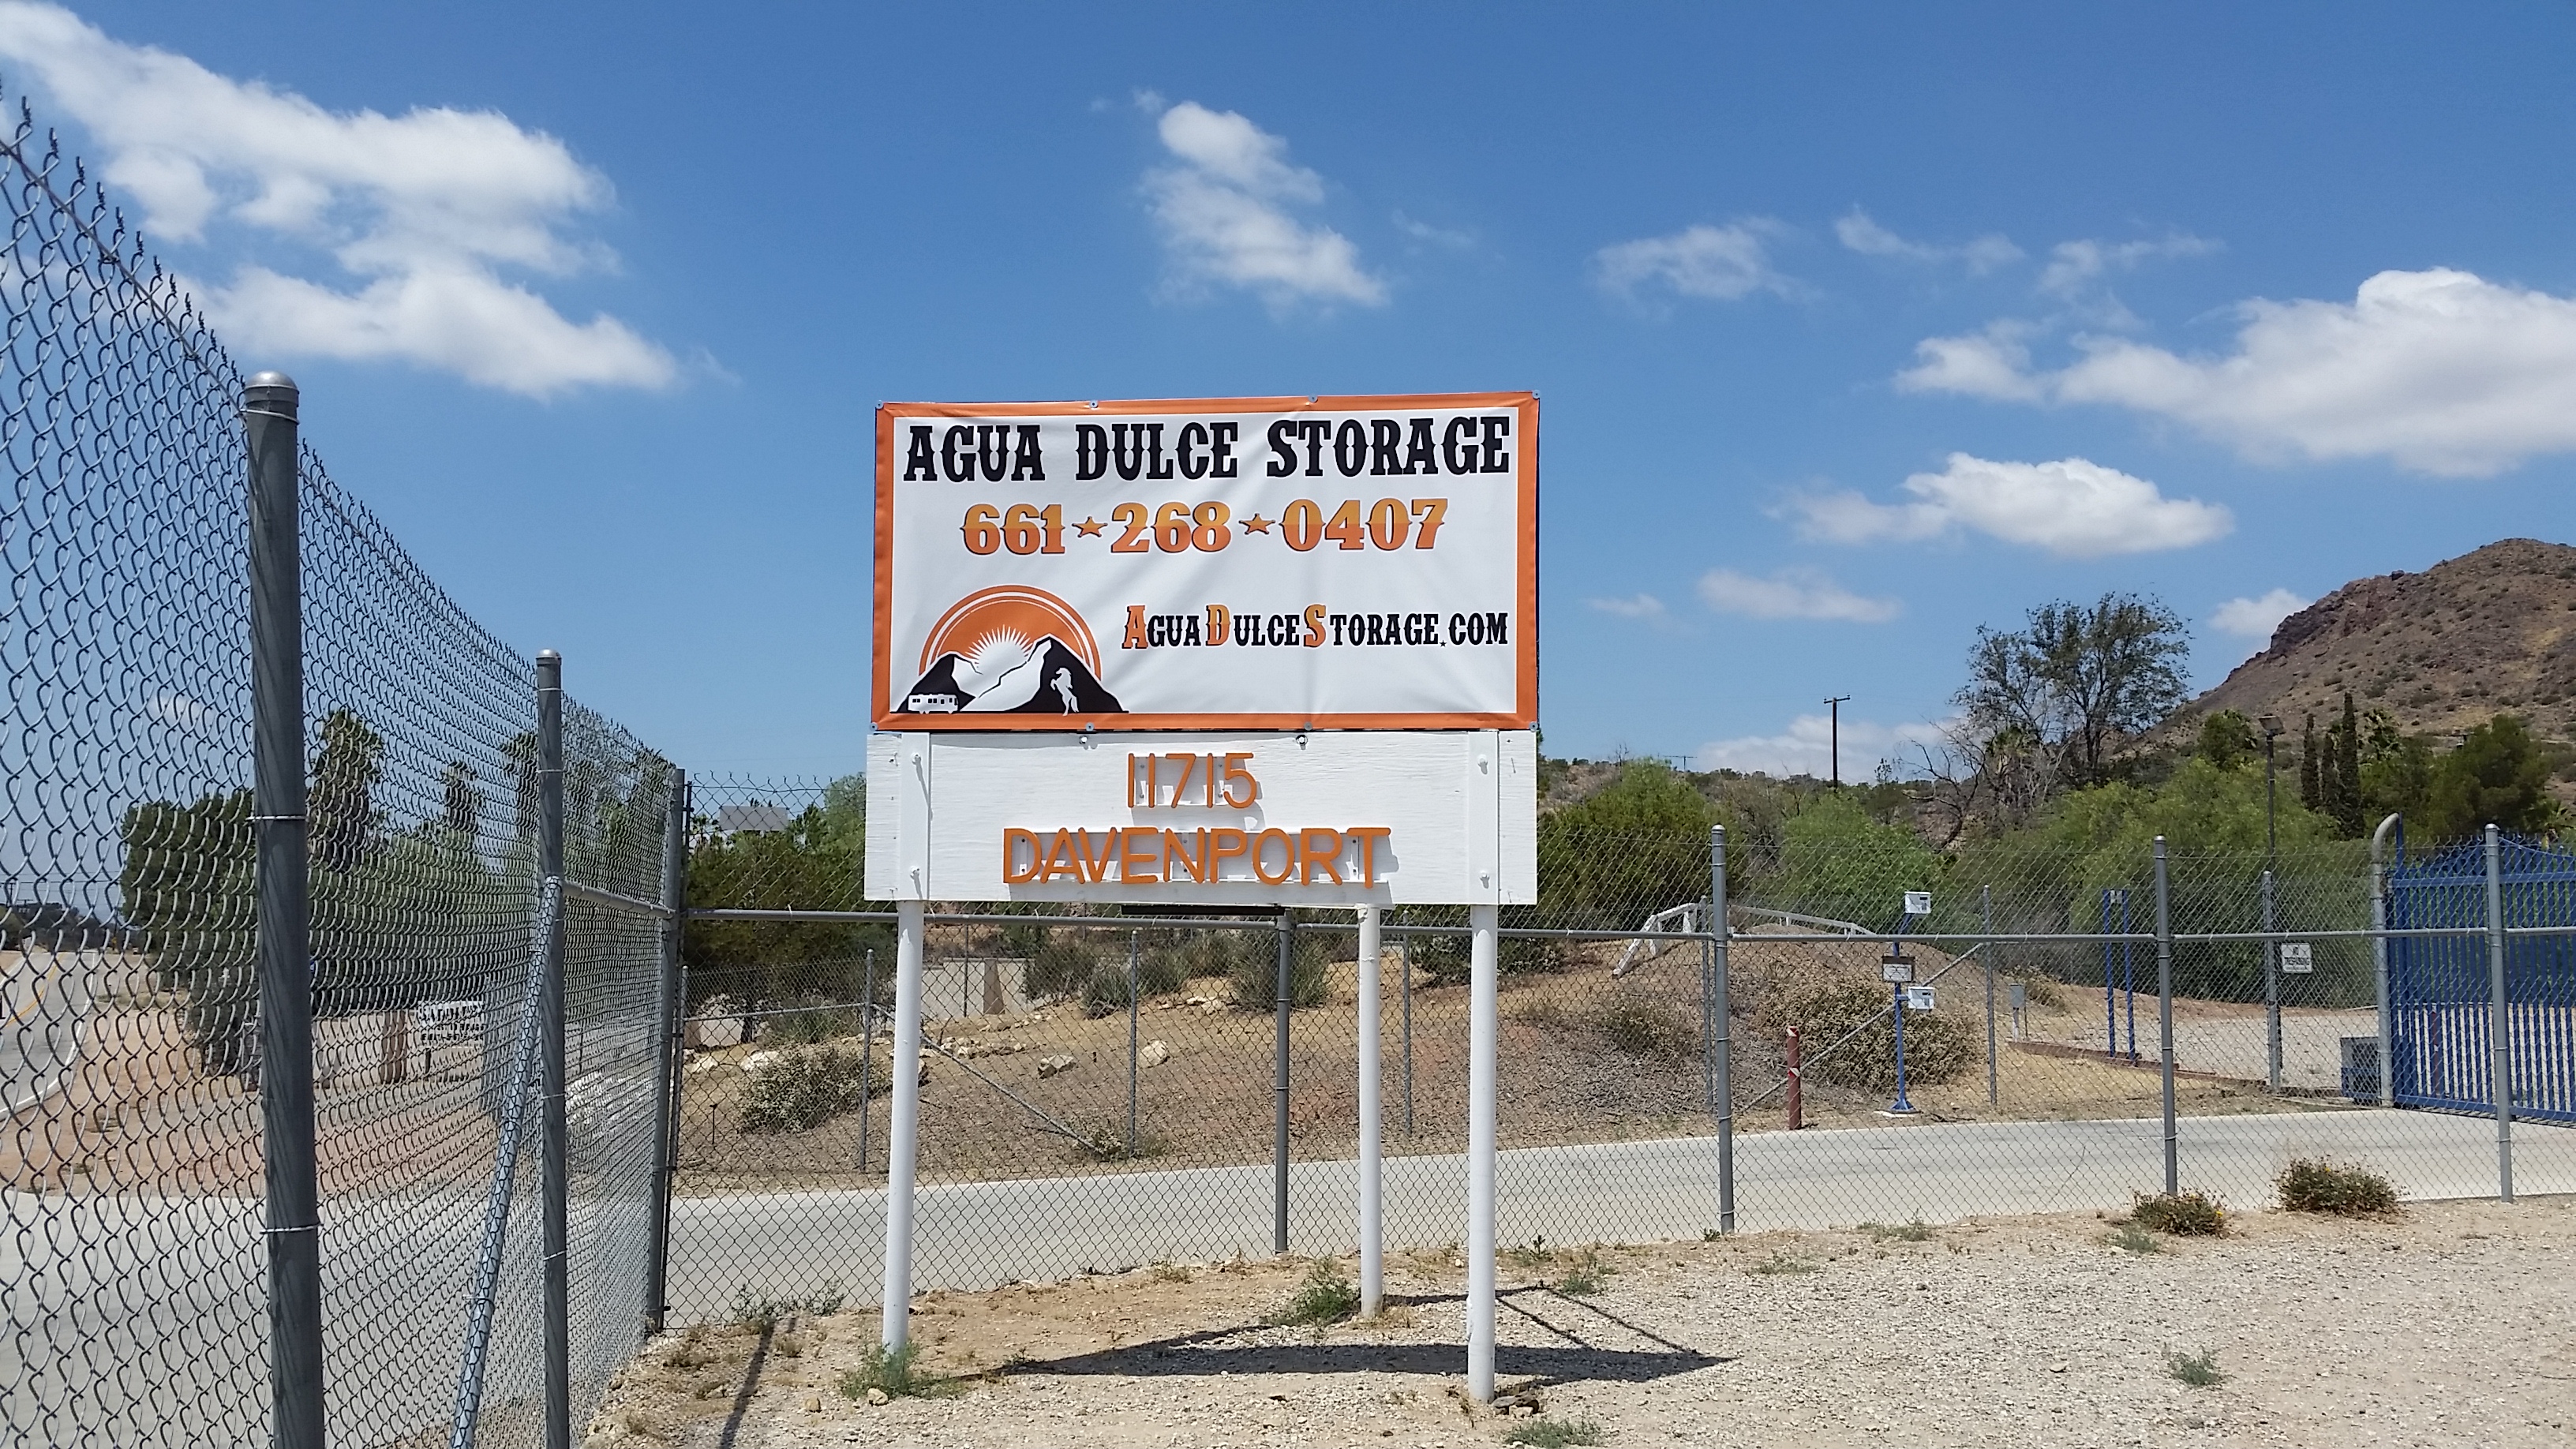 Agua Dulce Storage | 11715 Davenport Road Agua Dulce, California 91390 United States